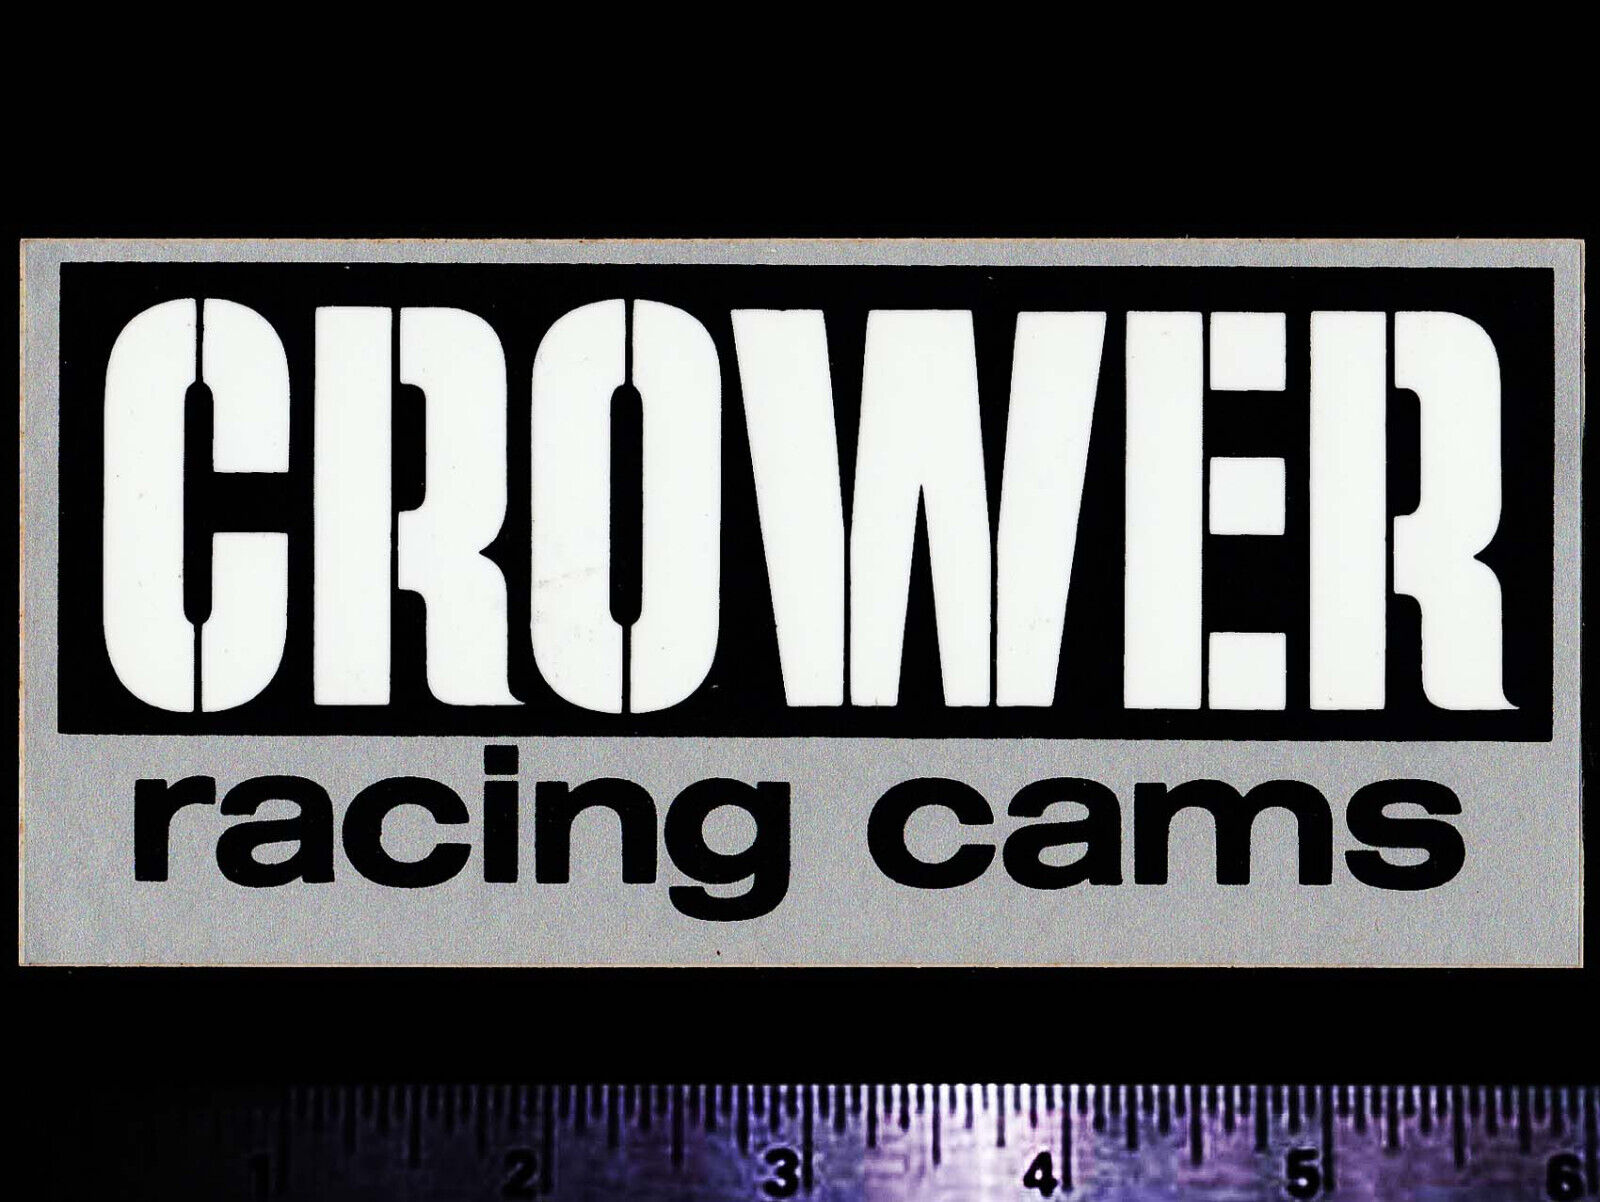 CROWER Racing Cams - Original Vintage 1970\'s Racing Decal/Sticker